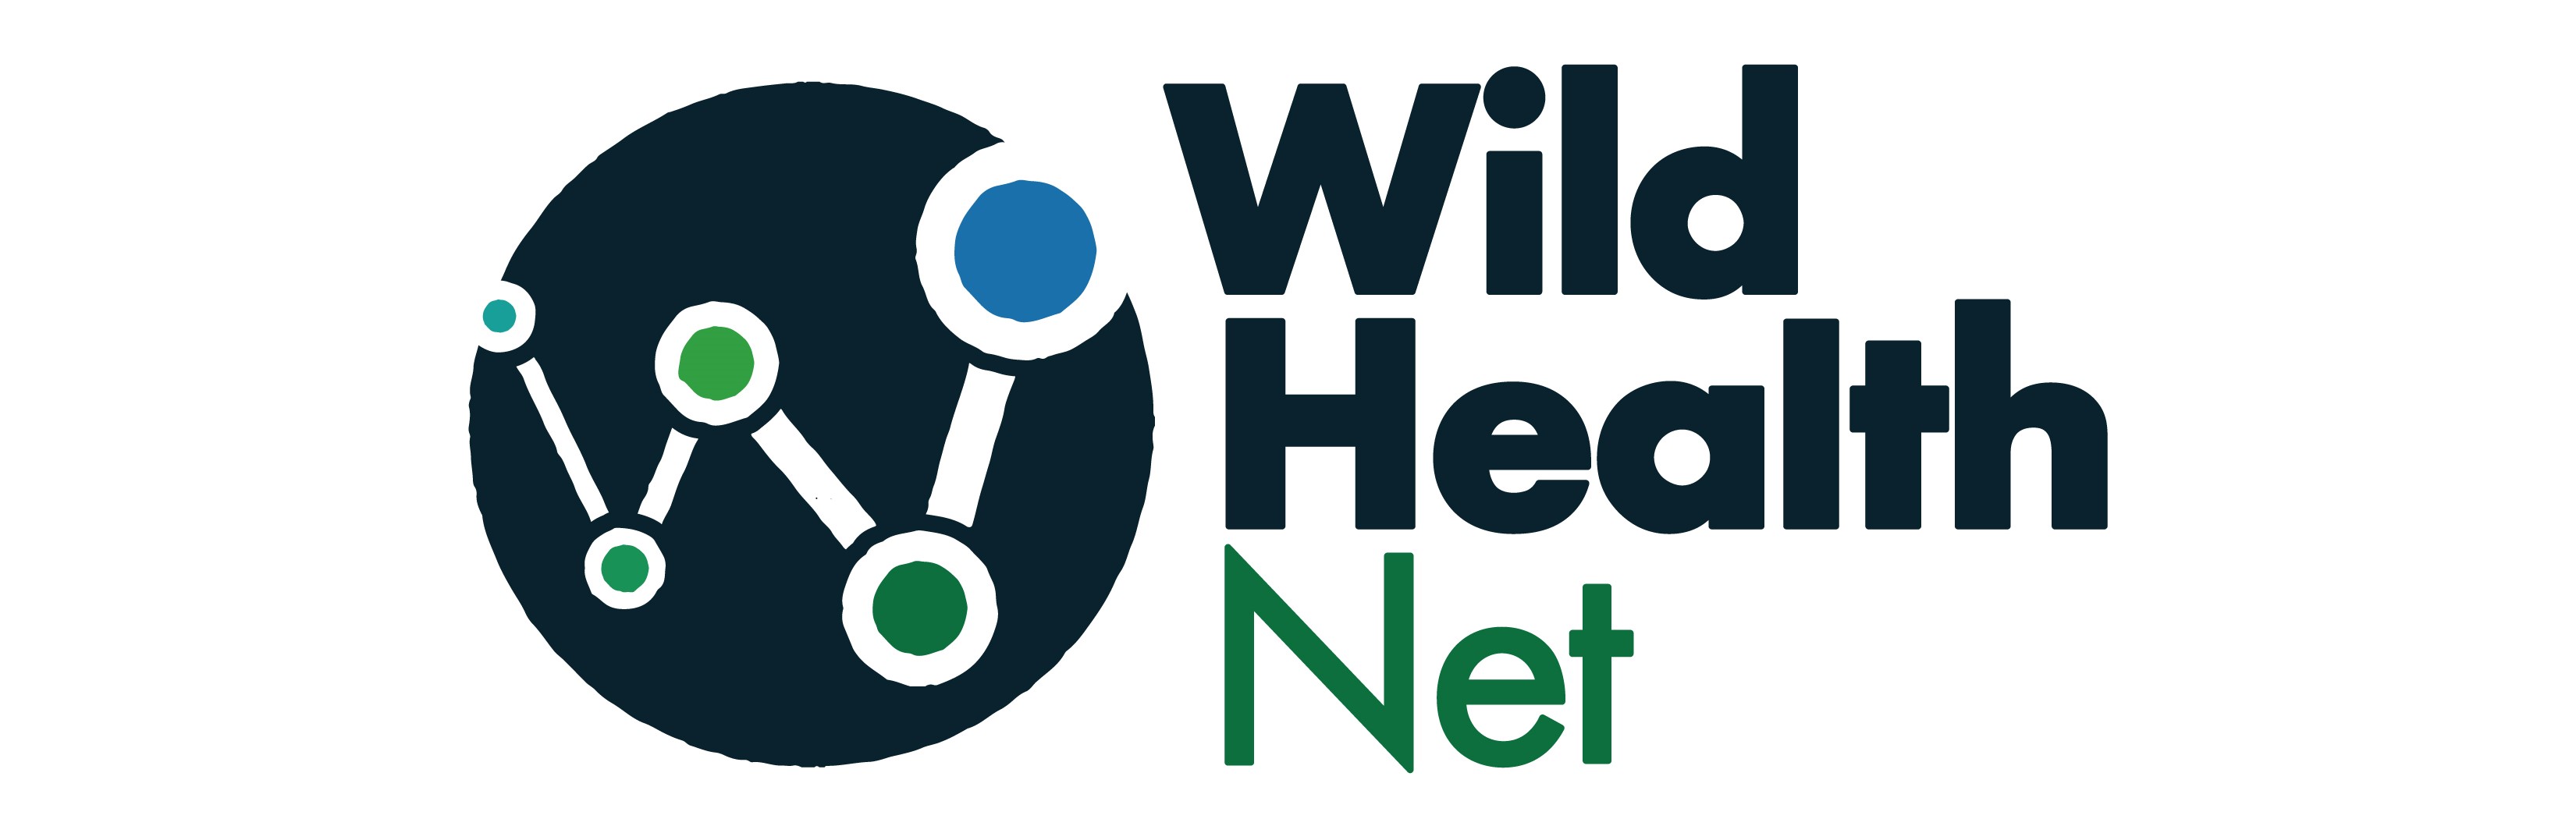 WildHealthNet logo